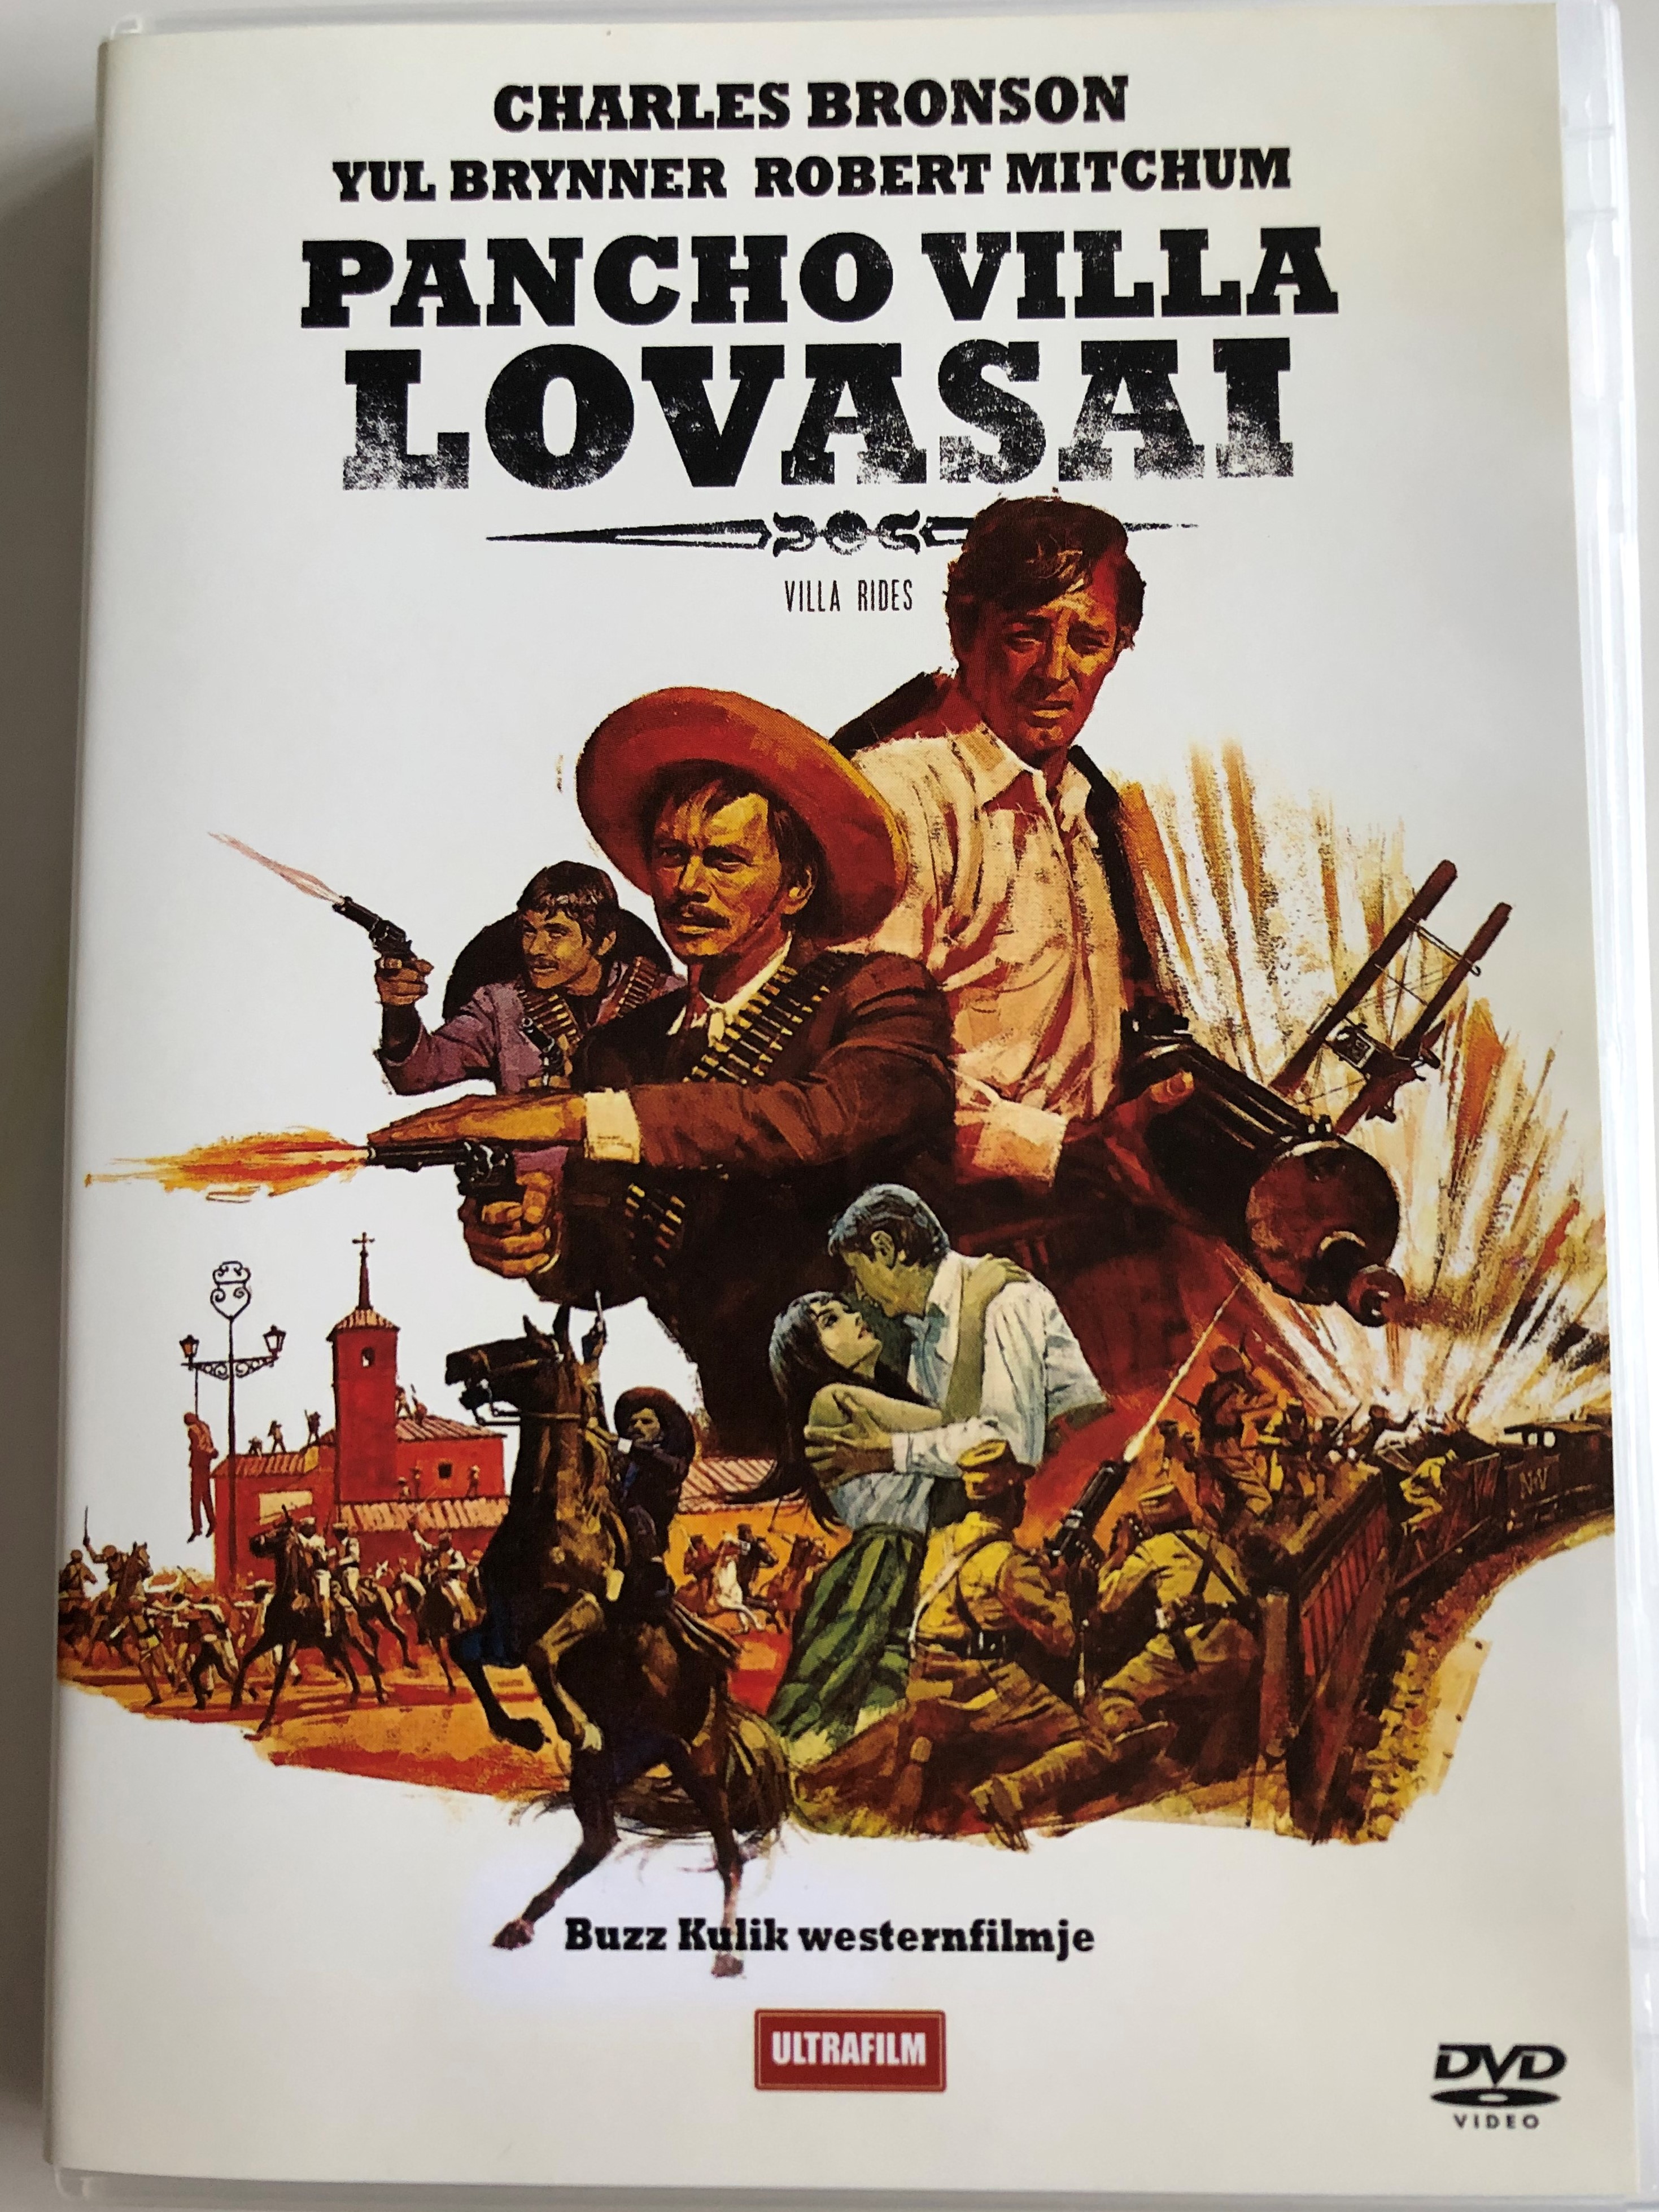 Villa Rides DVD 1968 Pancho Villa Lovasai / Directed by Buzz Kulik /  Starring: Yul Brynner, Robert Mitchum, Charles Bronson - Bible in My  Language